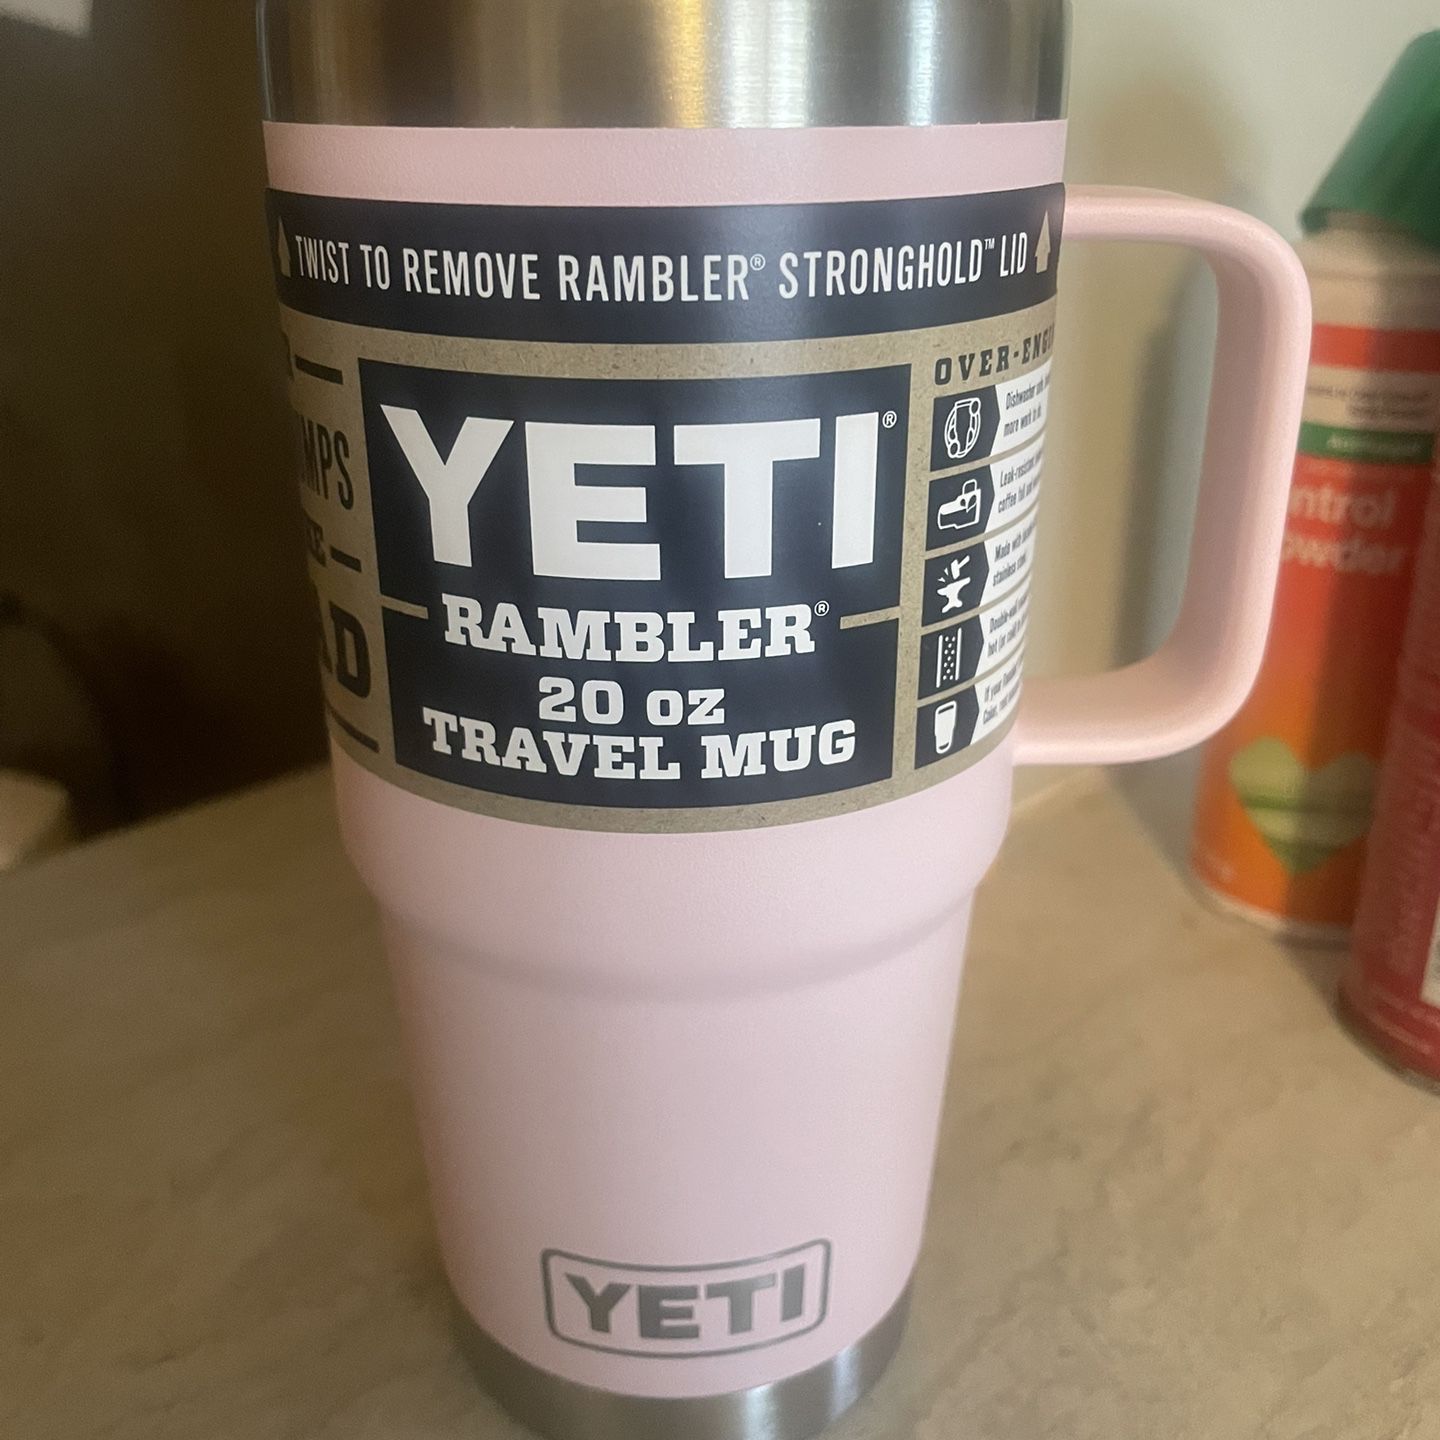 Brand New Yeti 14oz Sandstone Pink Rambler mug for Sale in San Antonio, TX  - OfferUp